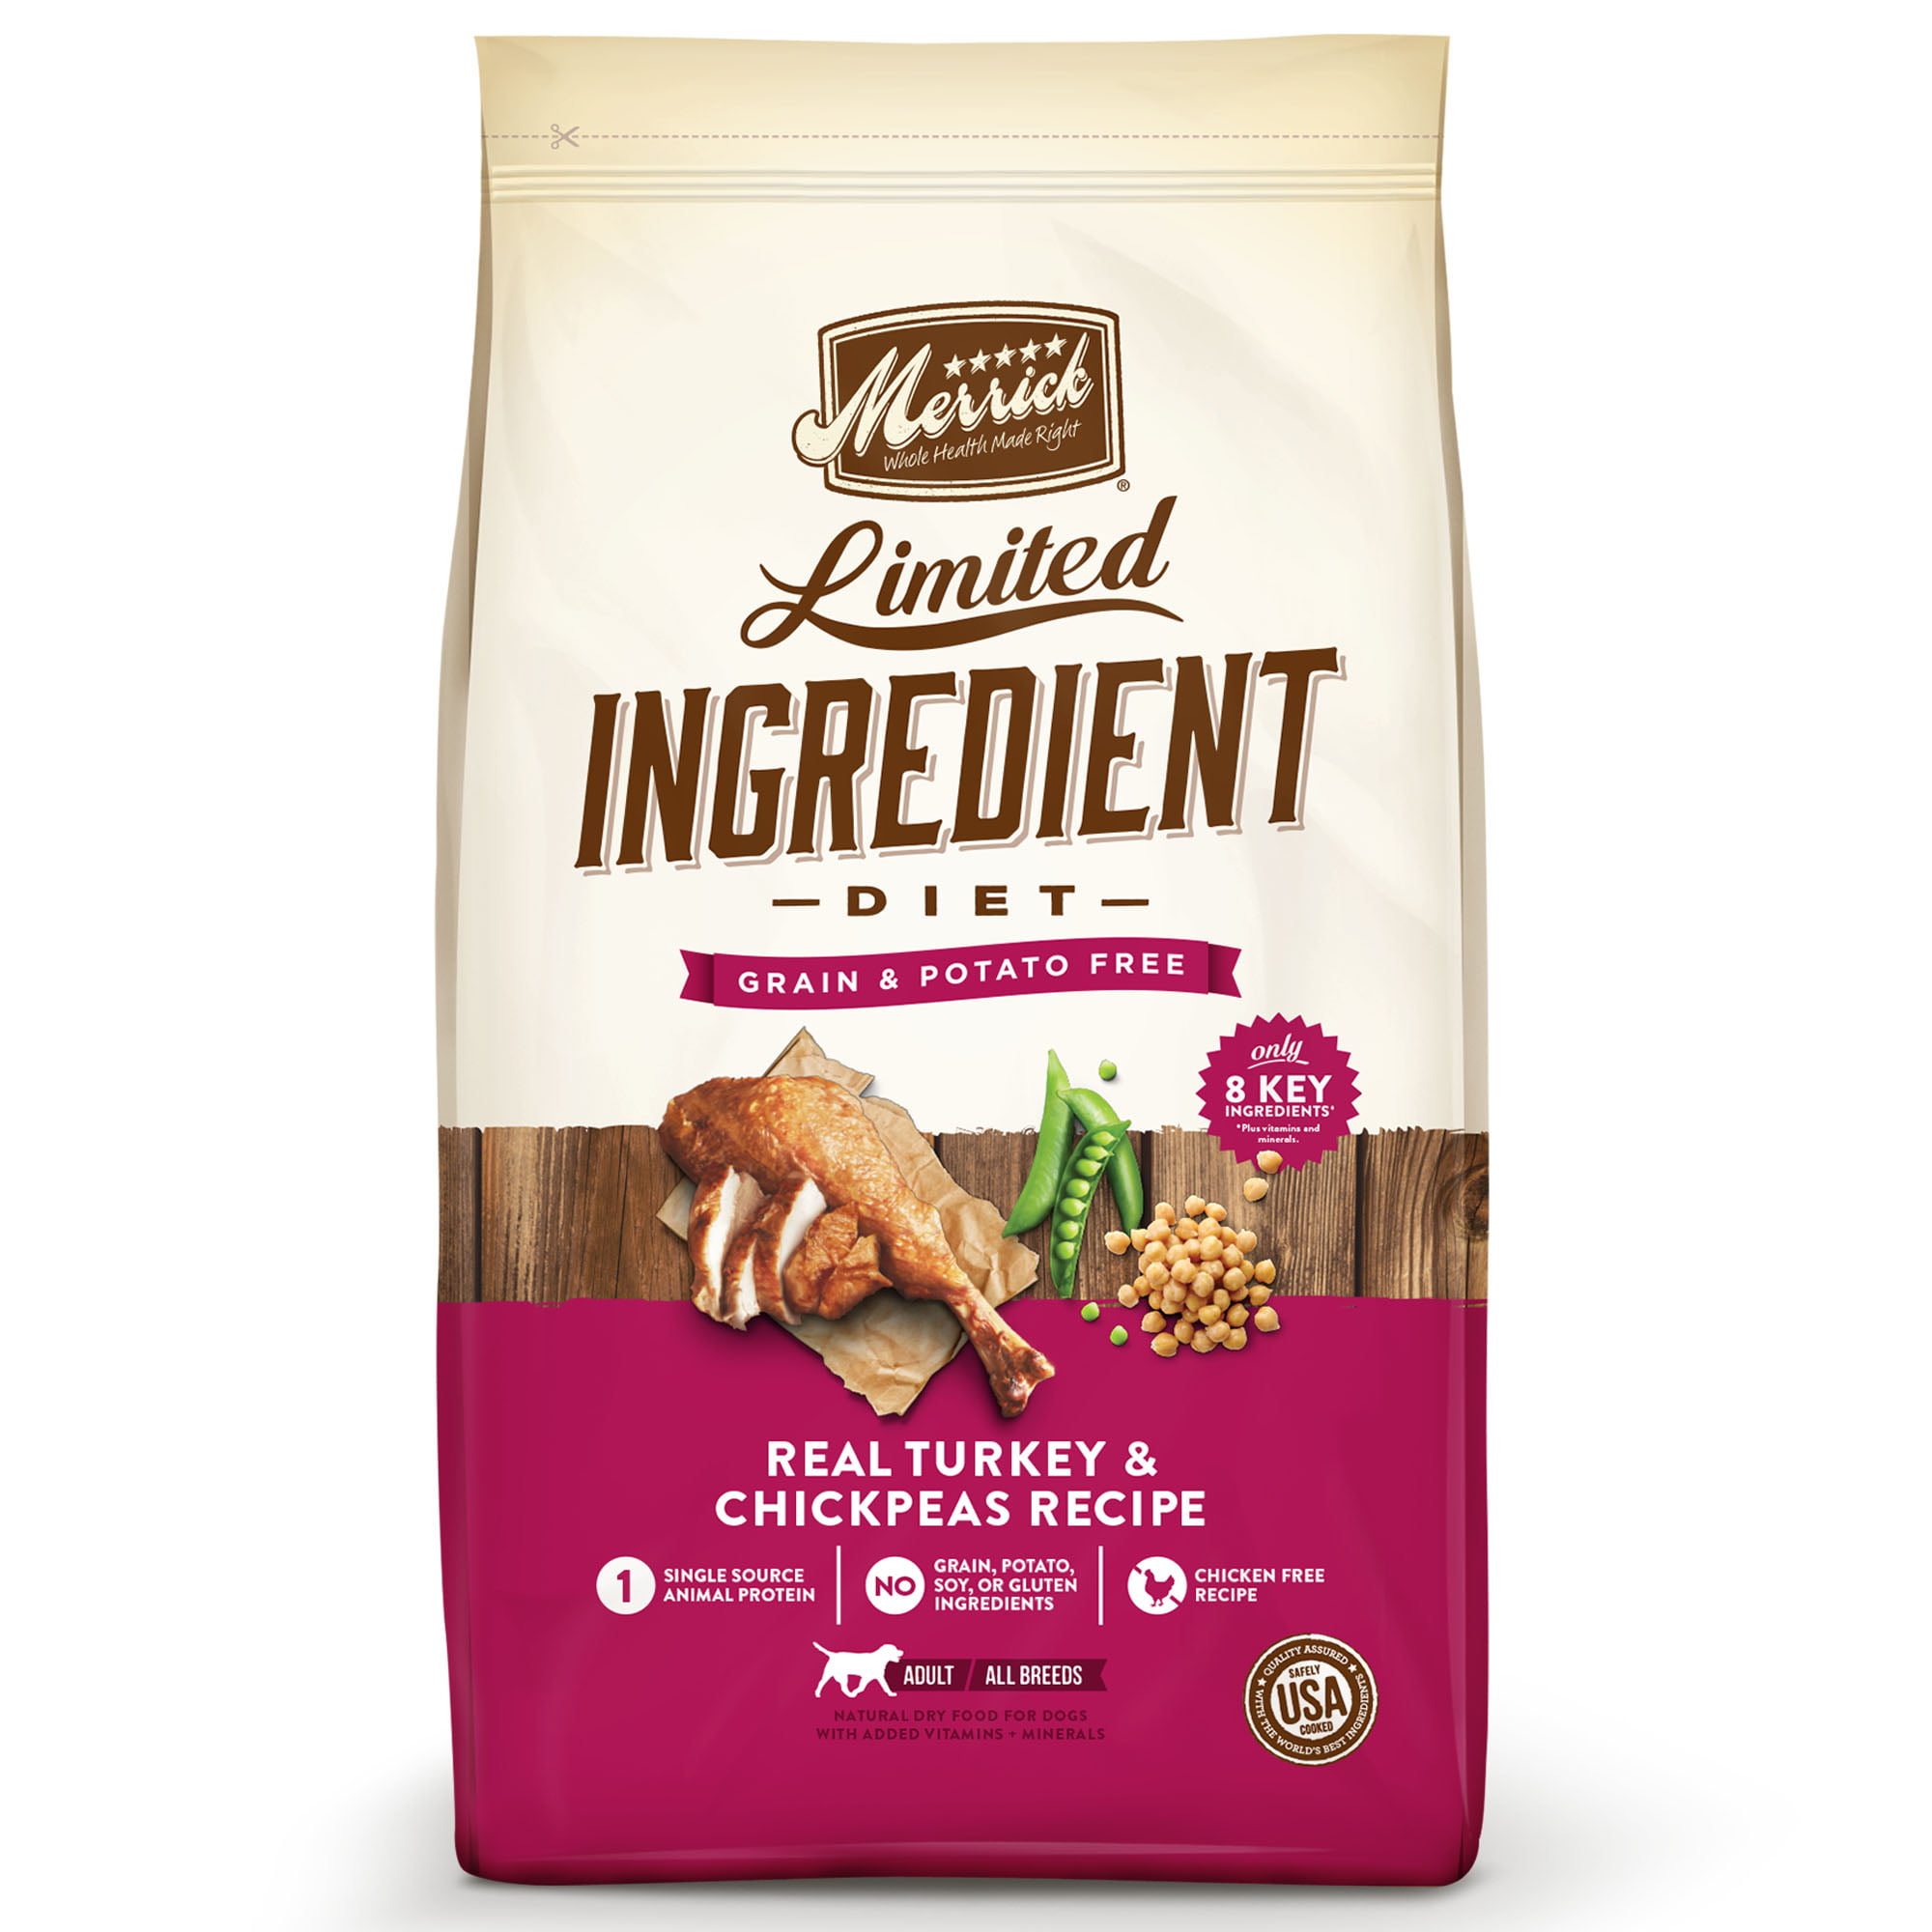 Merrick Limited Ingredient Diet Grain 